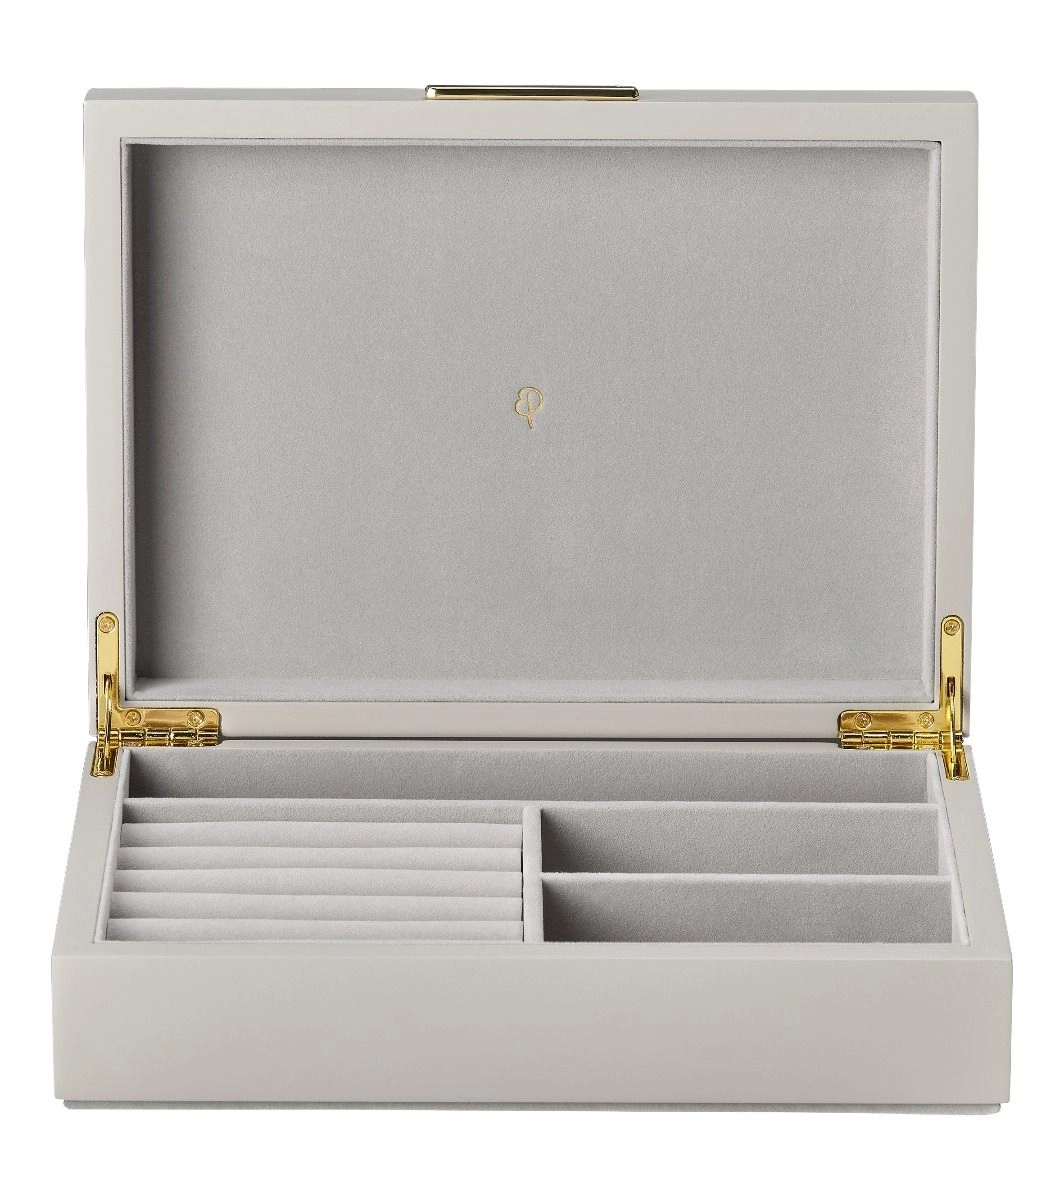 Jewellery Box M Light Clay Gold - Edblad - Snabb frakt & paketinslagning - Nordicspectra.se